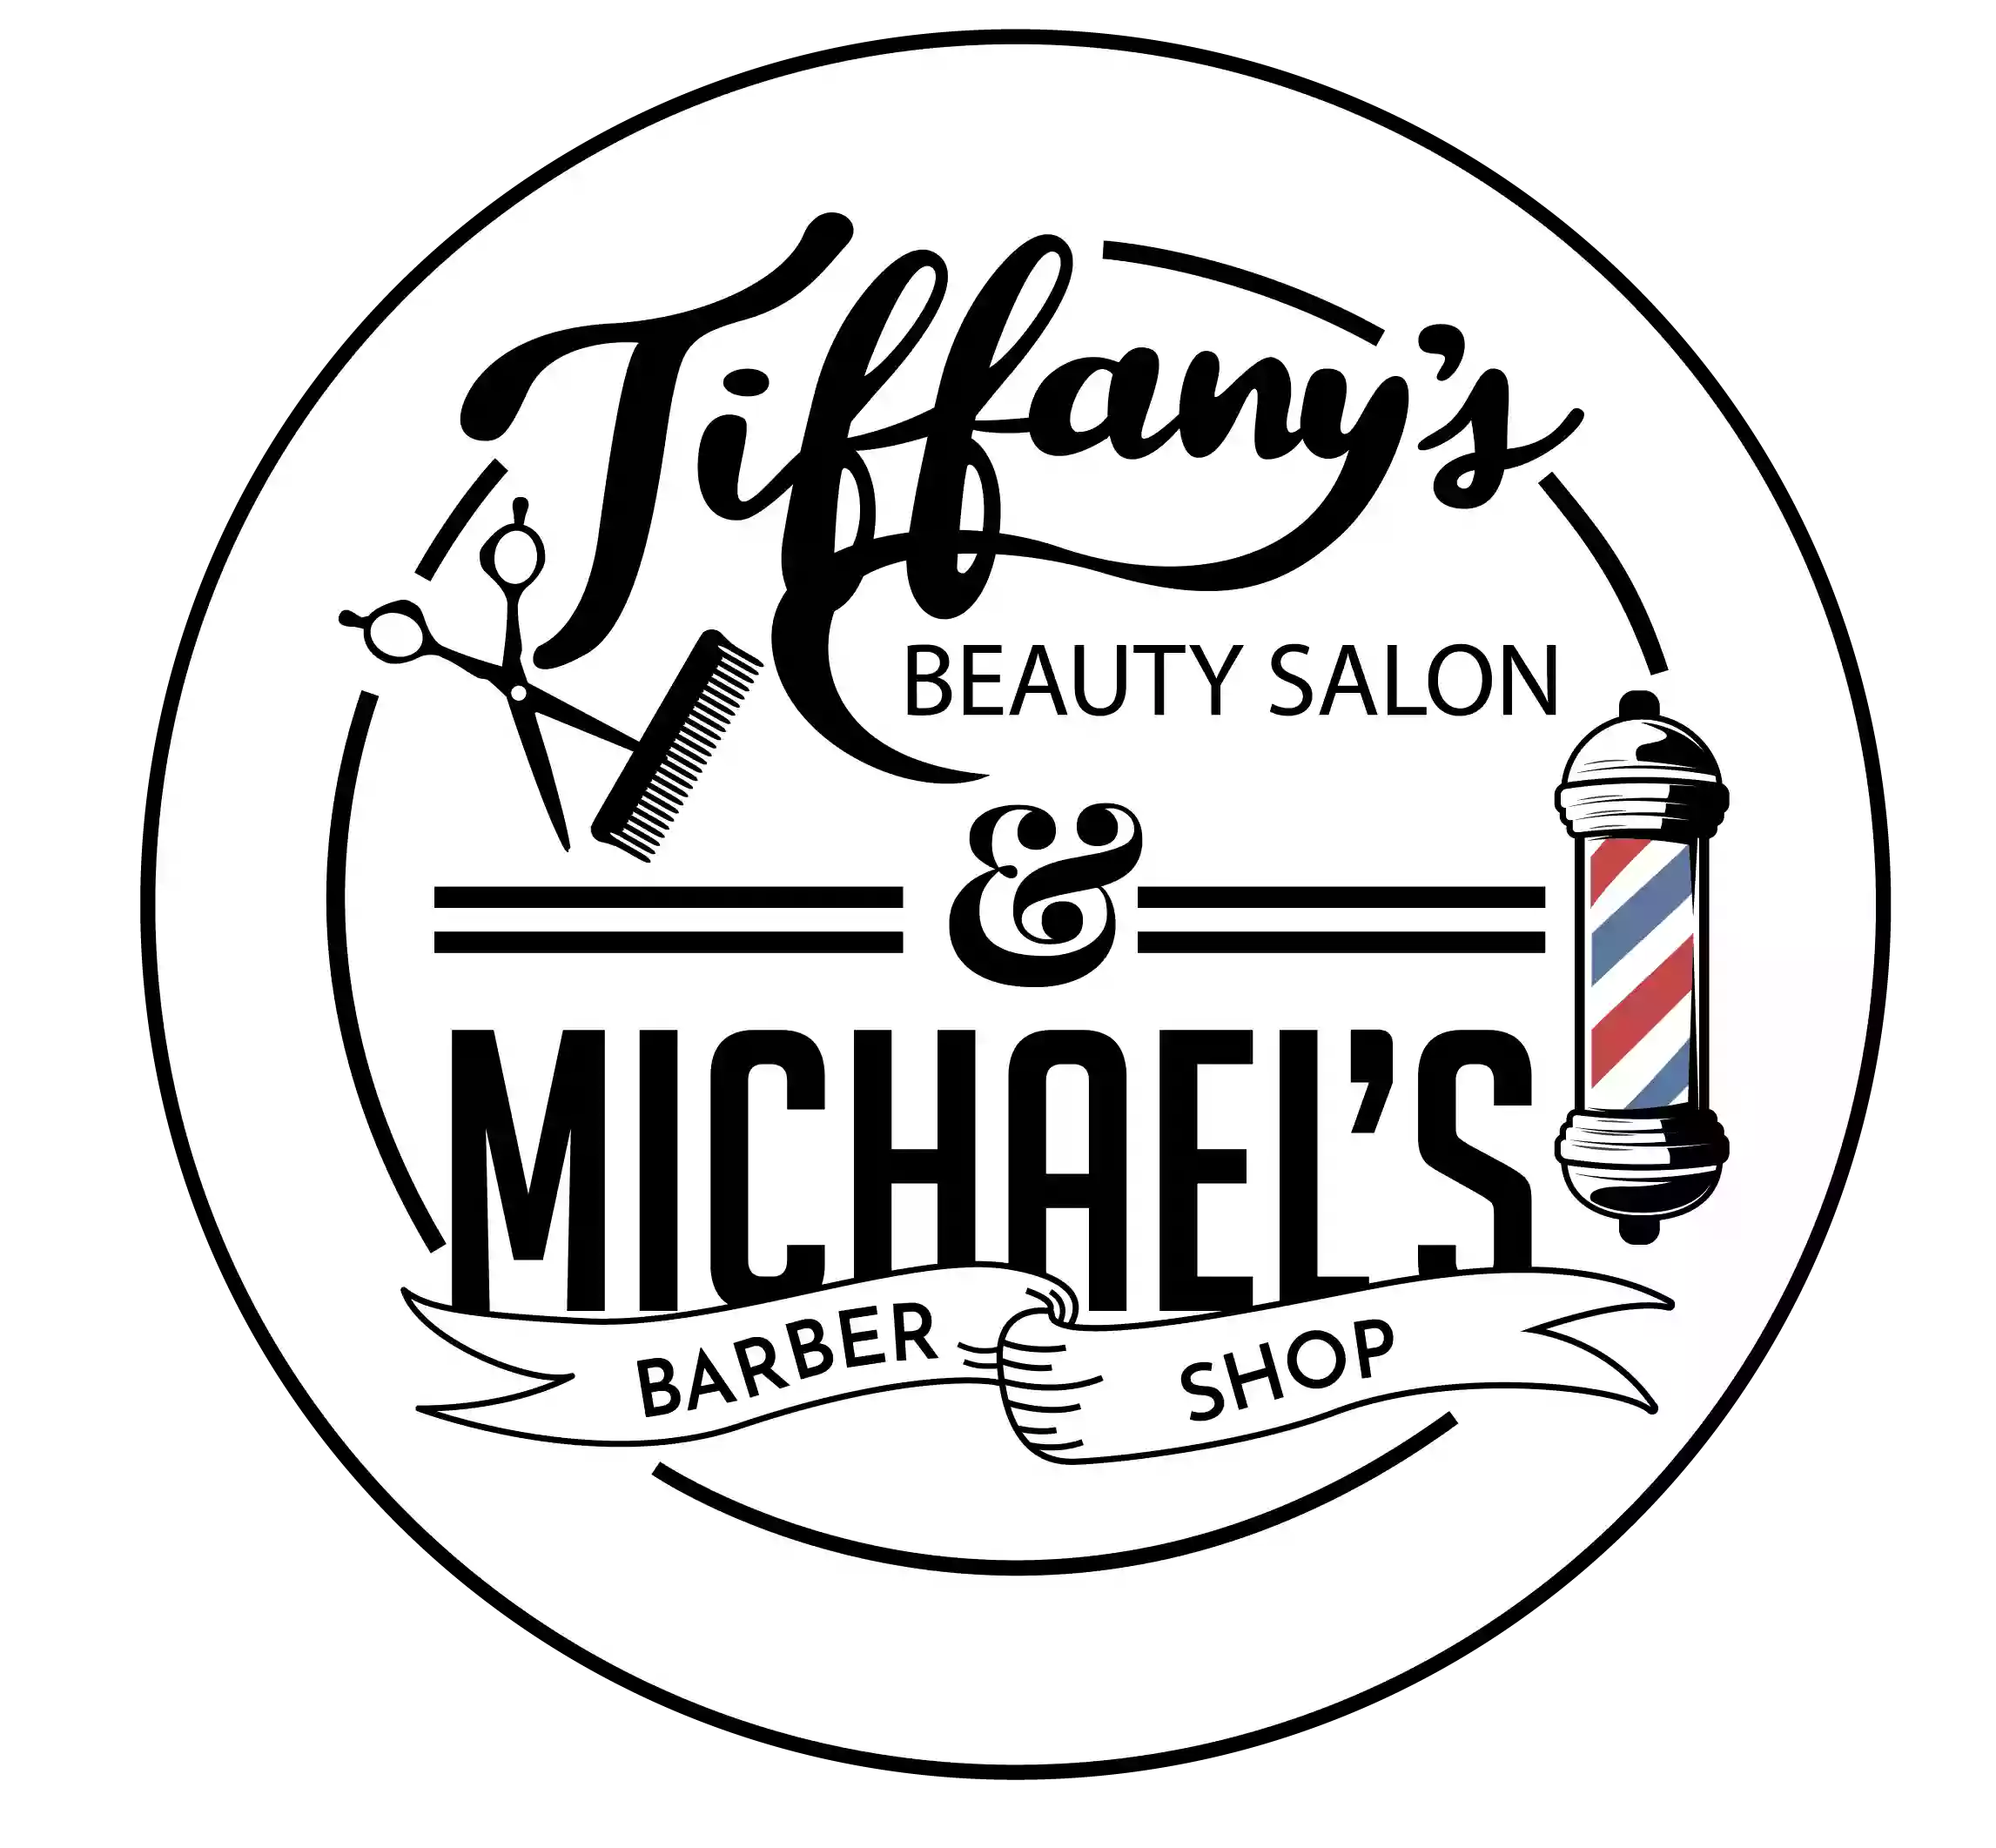 Tiffany's Beauty Salon & Michael's Barber Shop